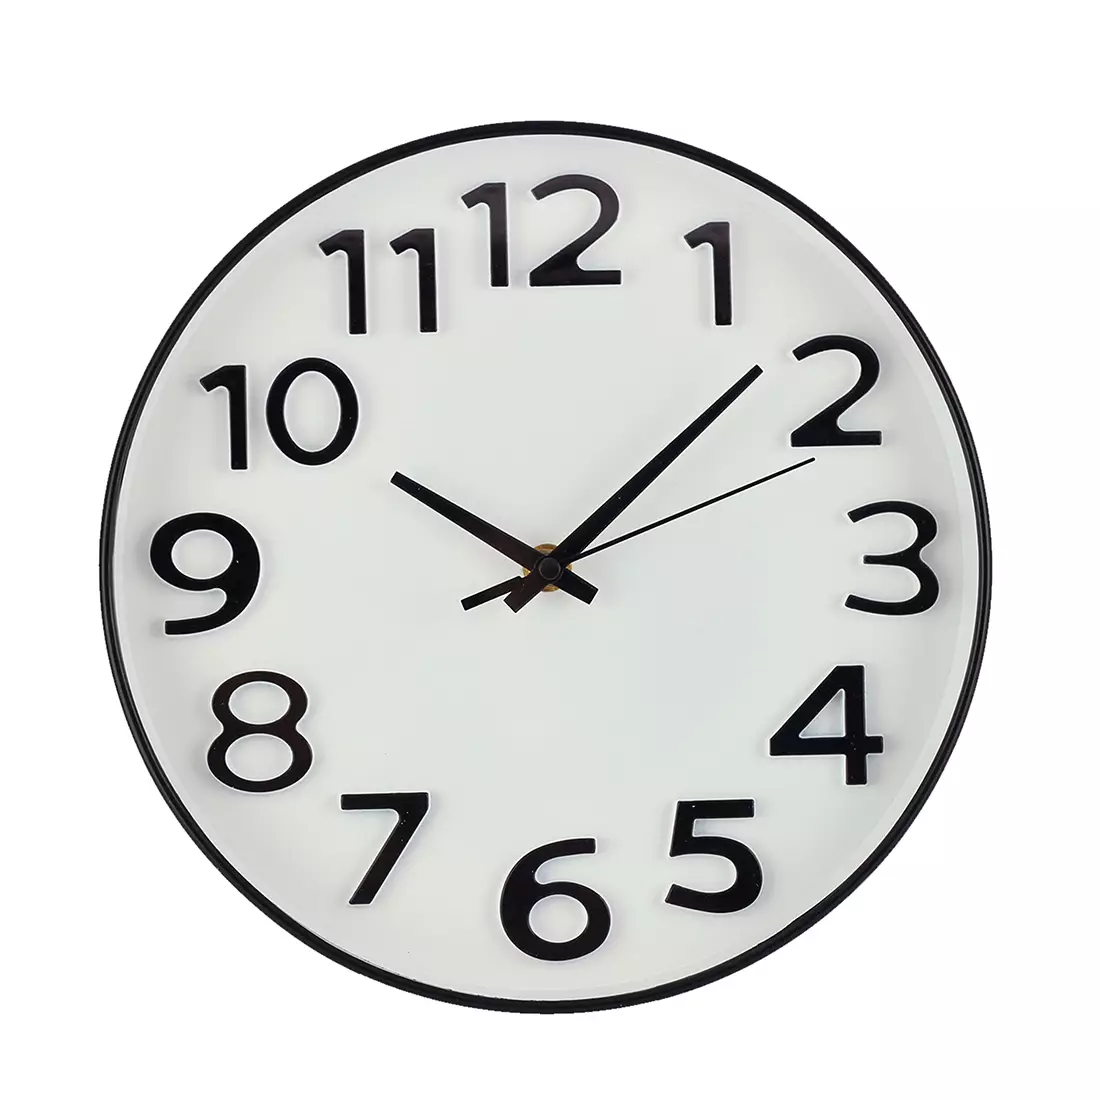 Buy Edge Houseware 25cm Silent Non-Ticking Wall Clock Round Easy to ...